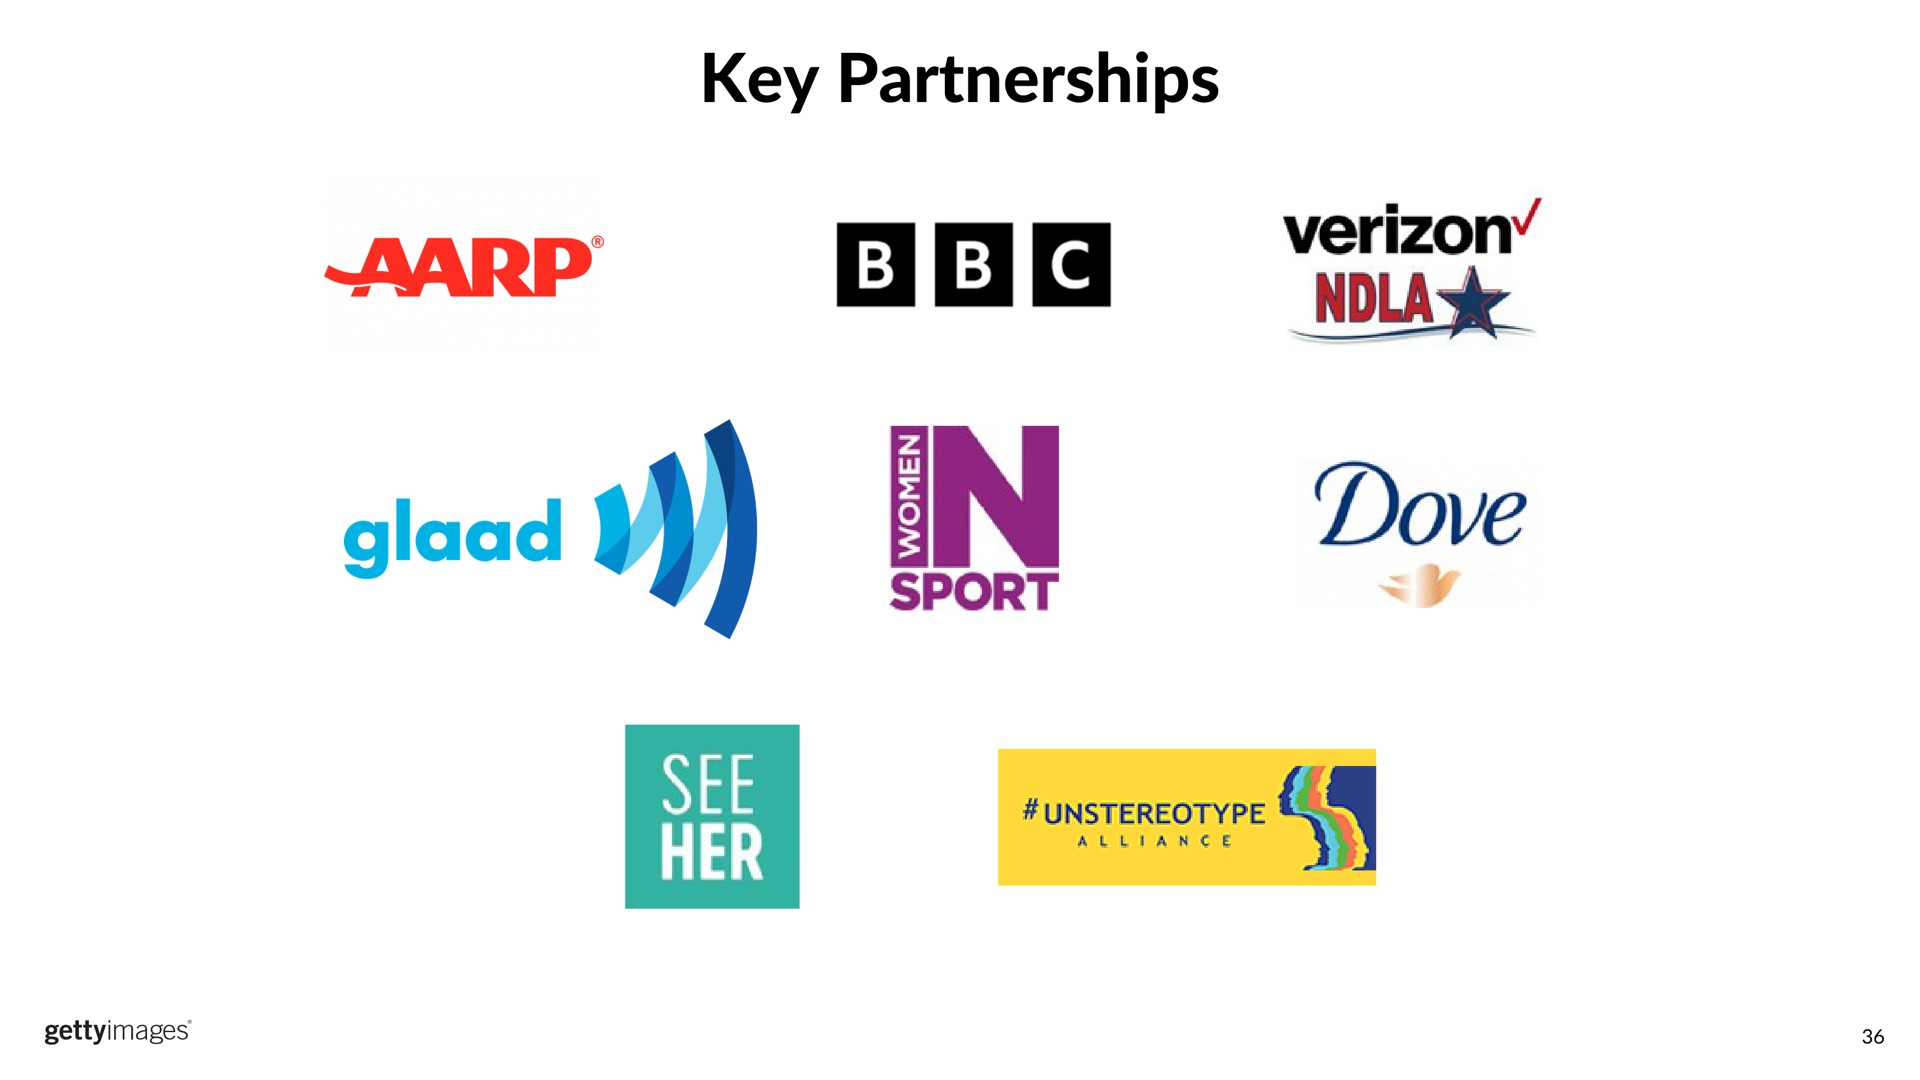 key partnerships sport dove | Getty